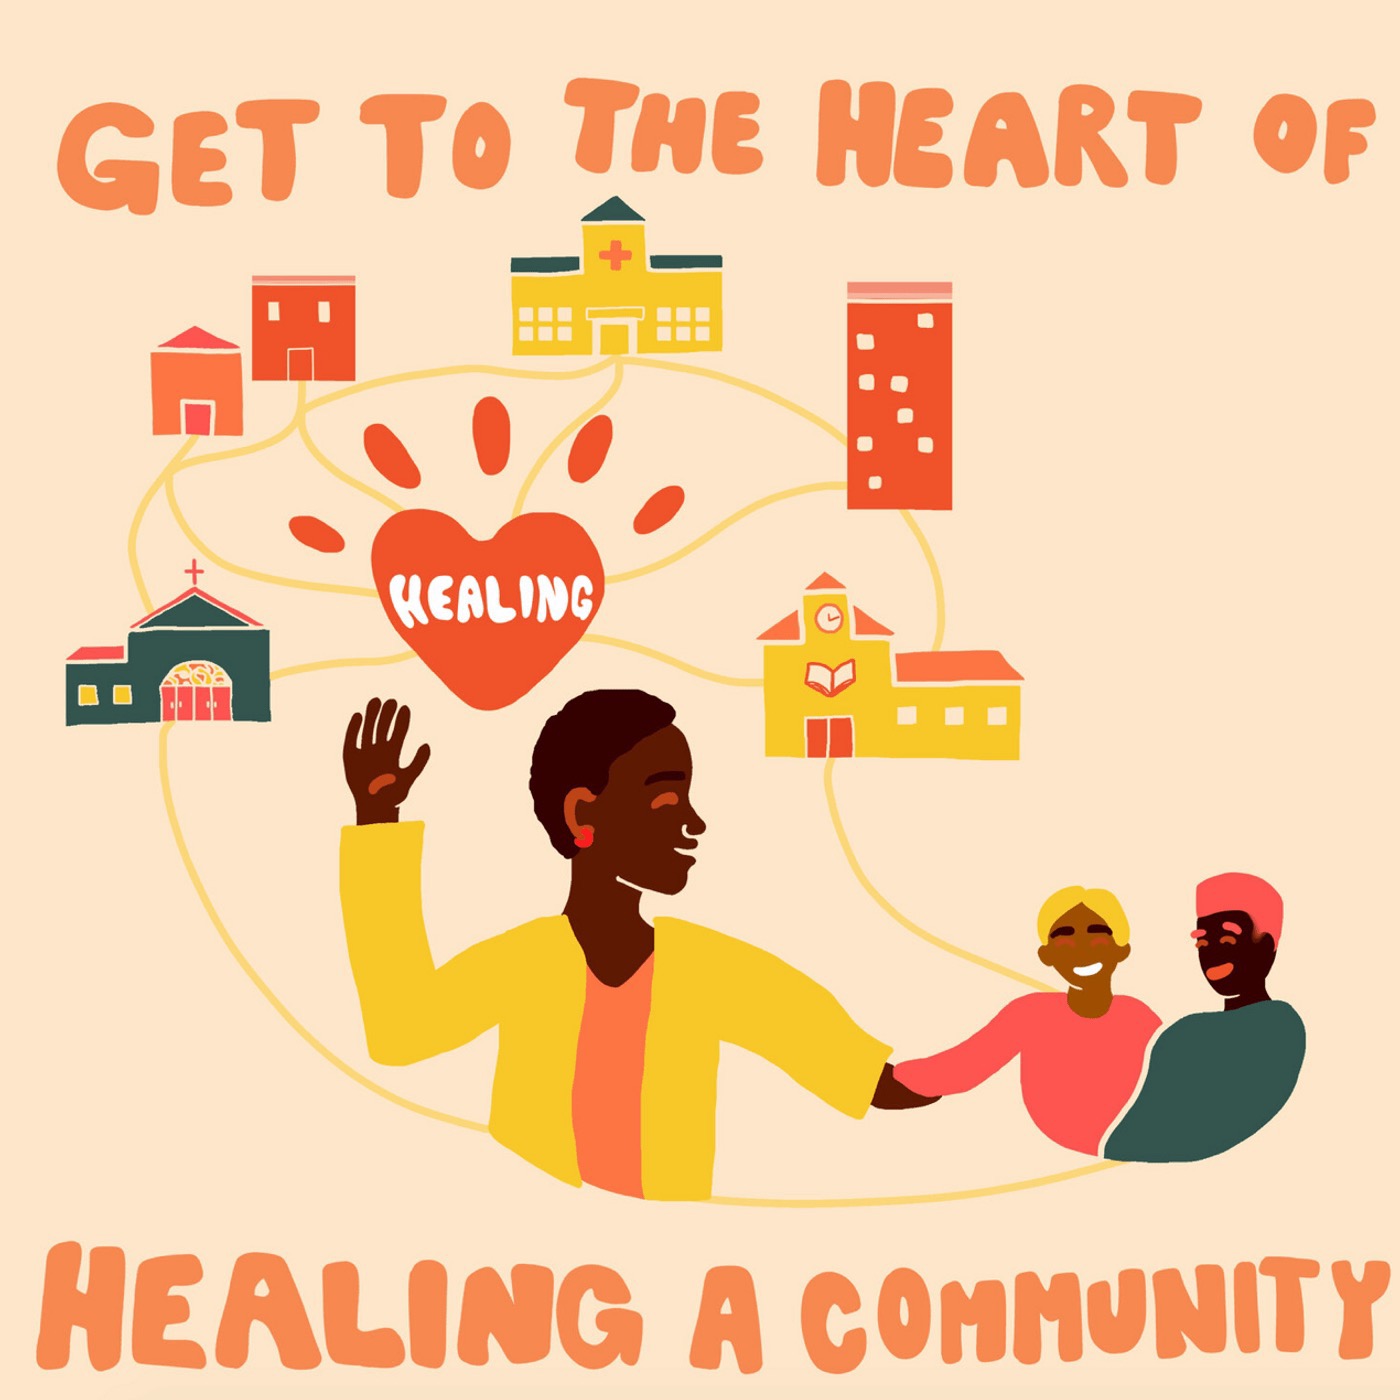 [21] St. Louis Mutual Aid: Meeting Basic Needs Through Community